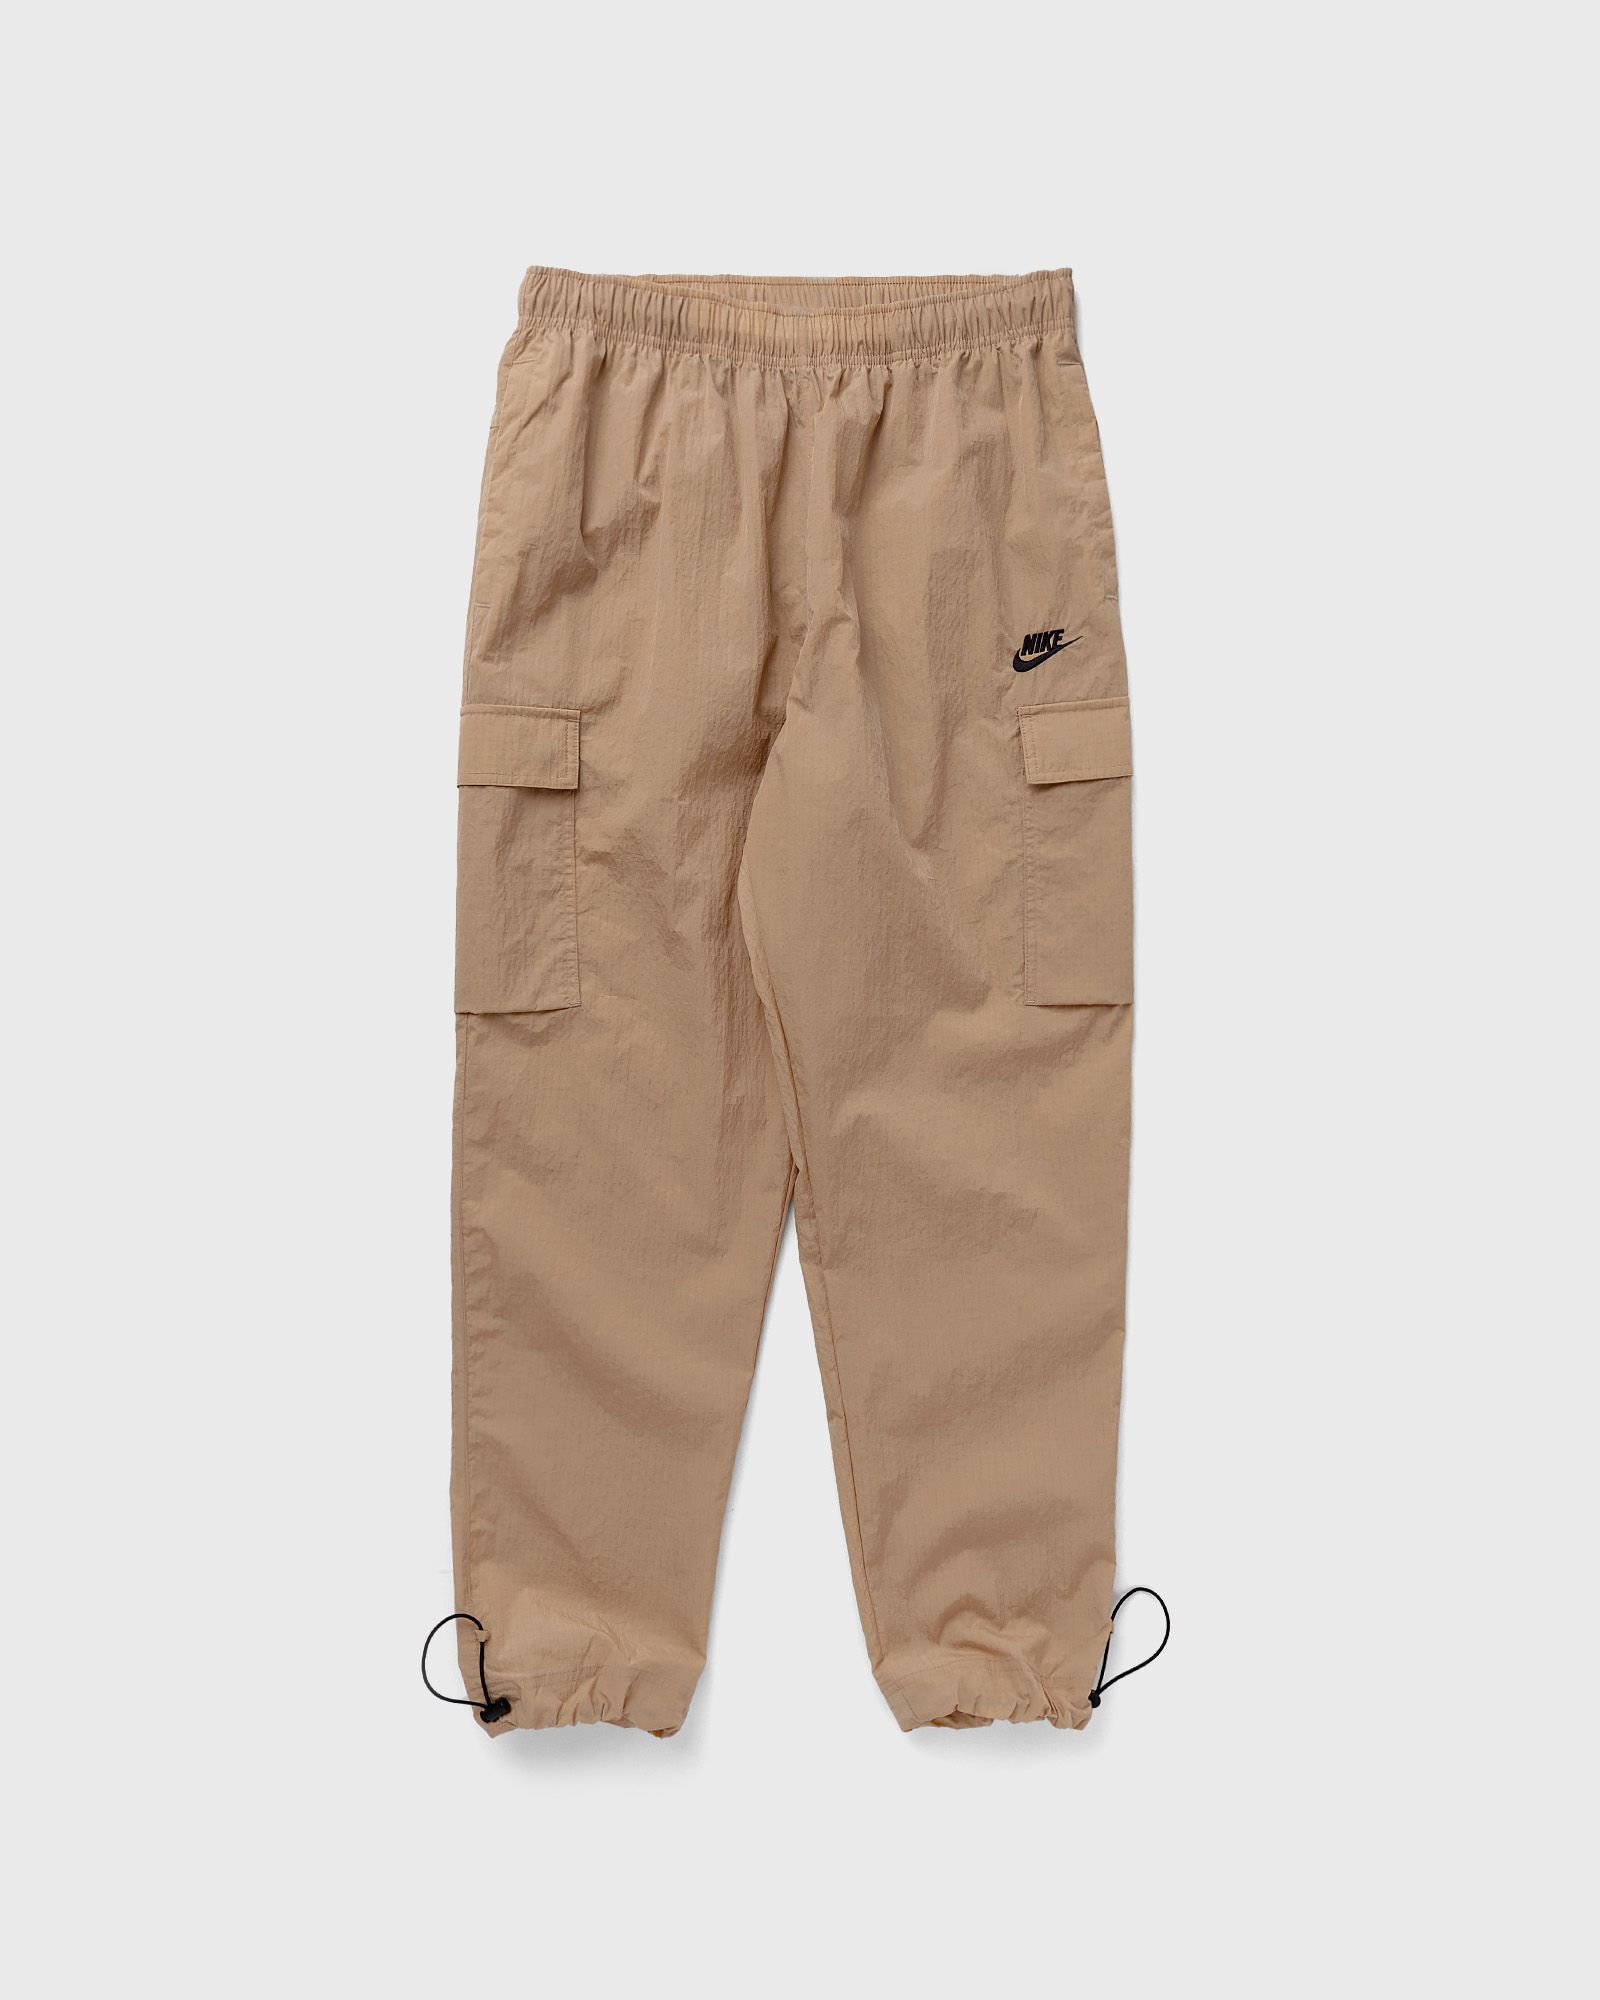 Nike - lightweight woven pant men cargo pants brown in größe:xl